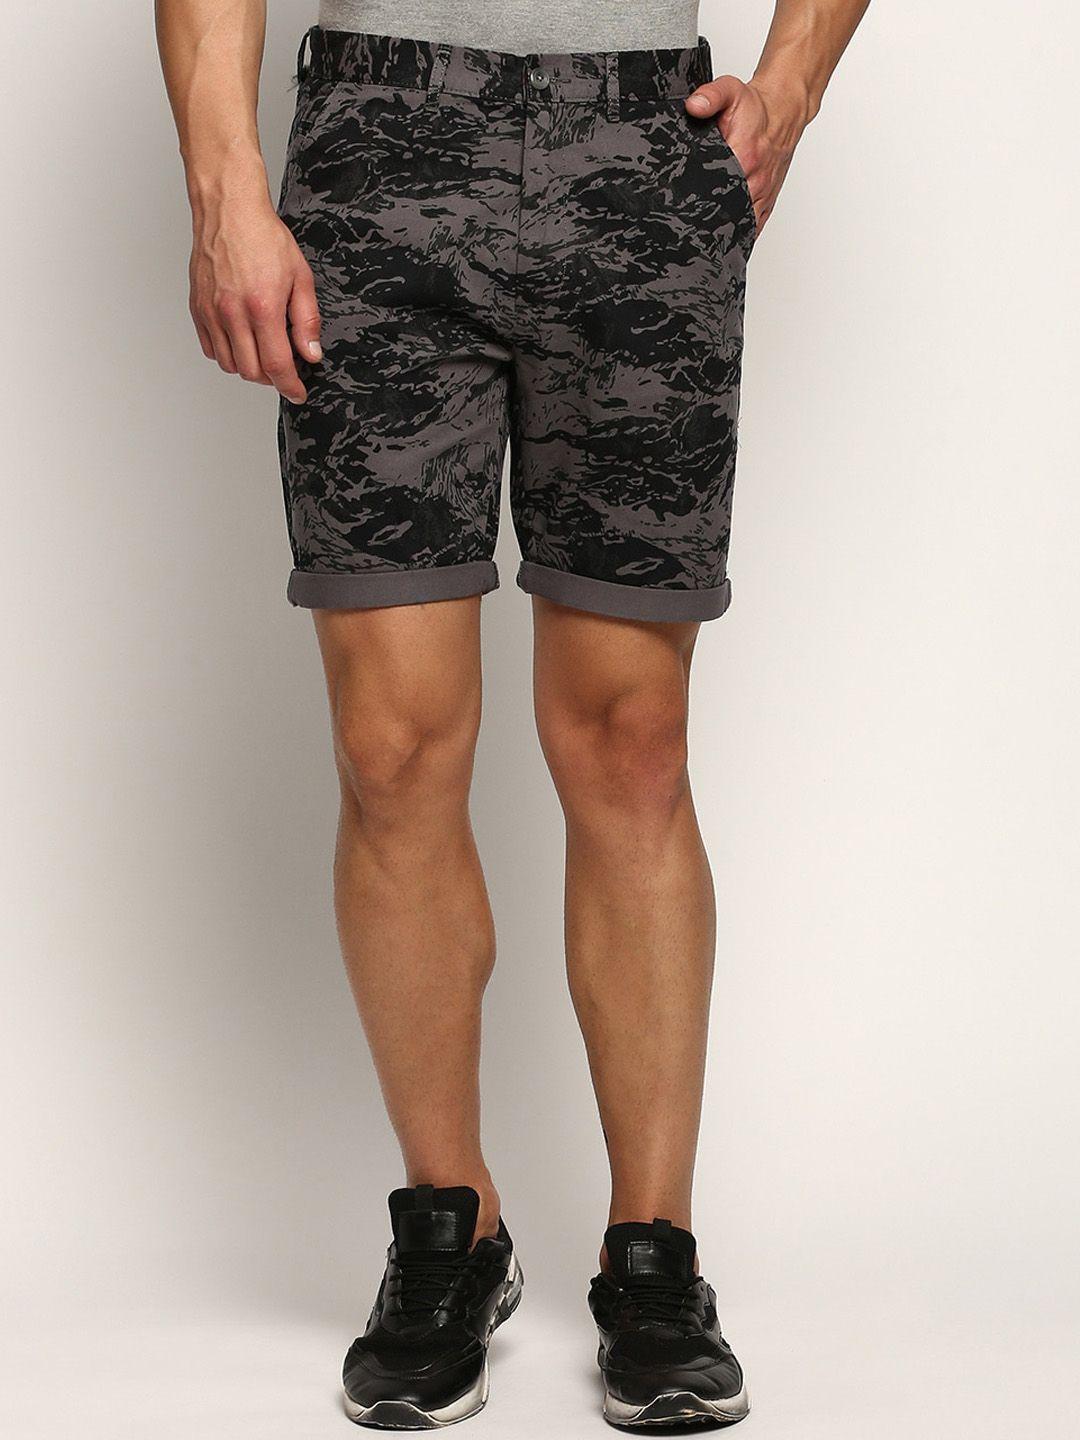 showoff-men-abstract-printed-mid-rise-cotton-shorts